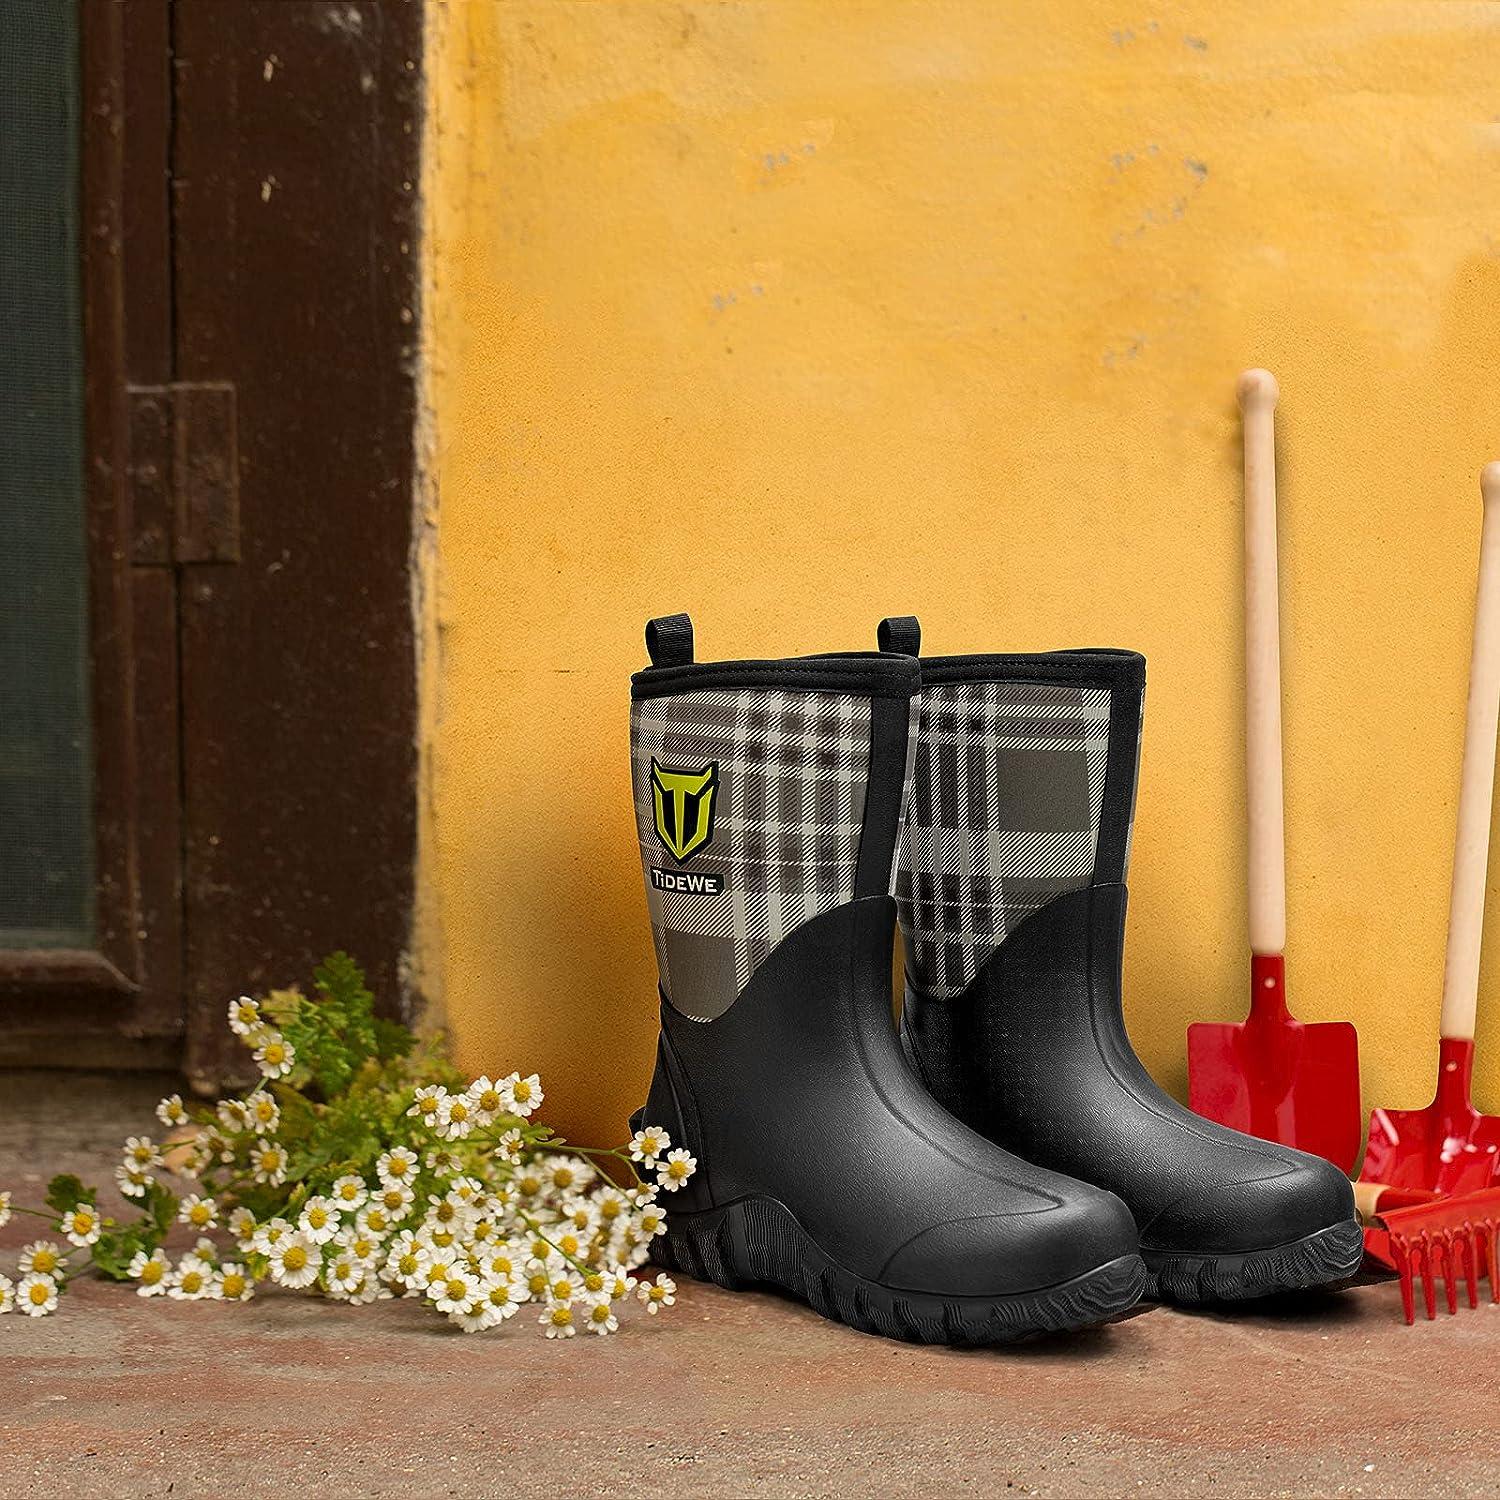 TIDEWE Rubber Boots for Women, 5.5mm Neoprene Insulated Rain Boots